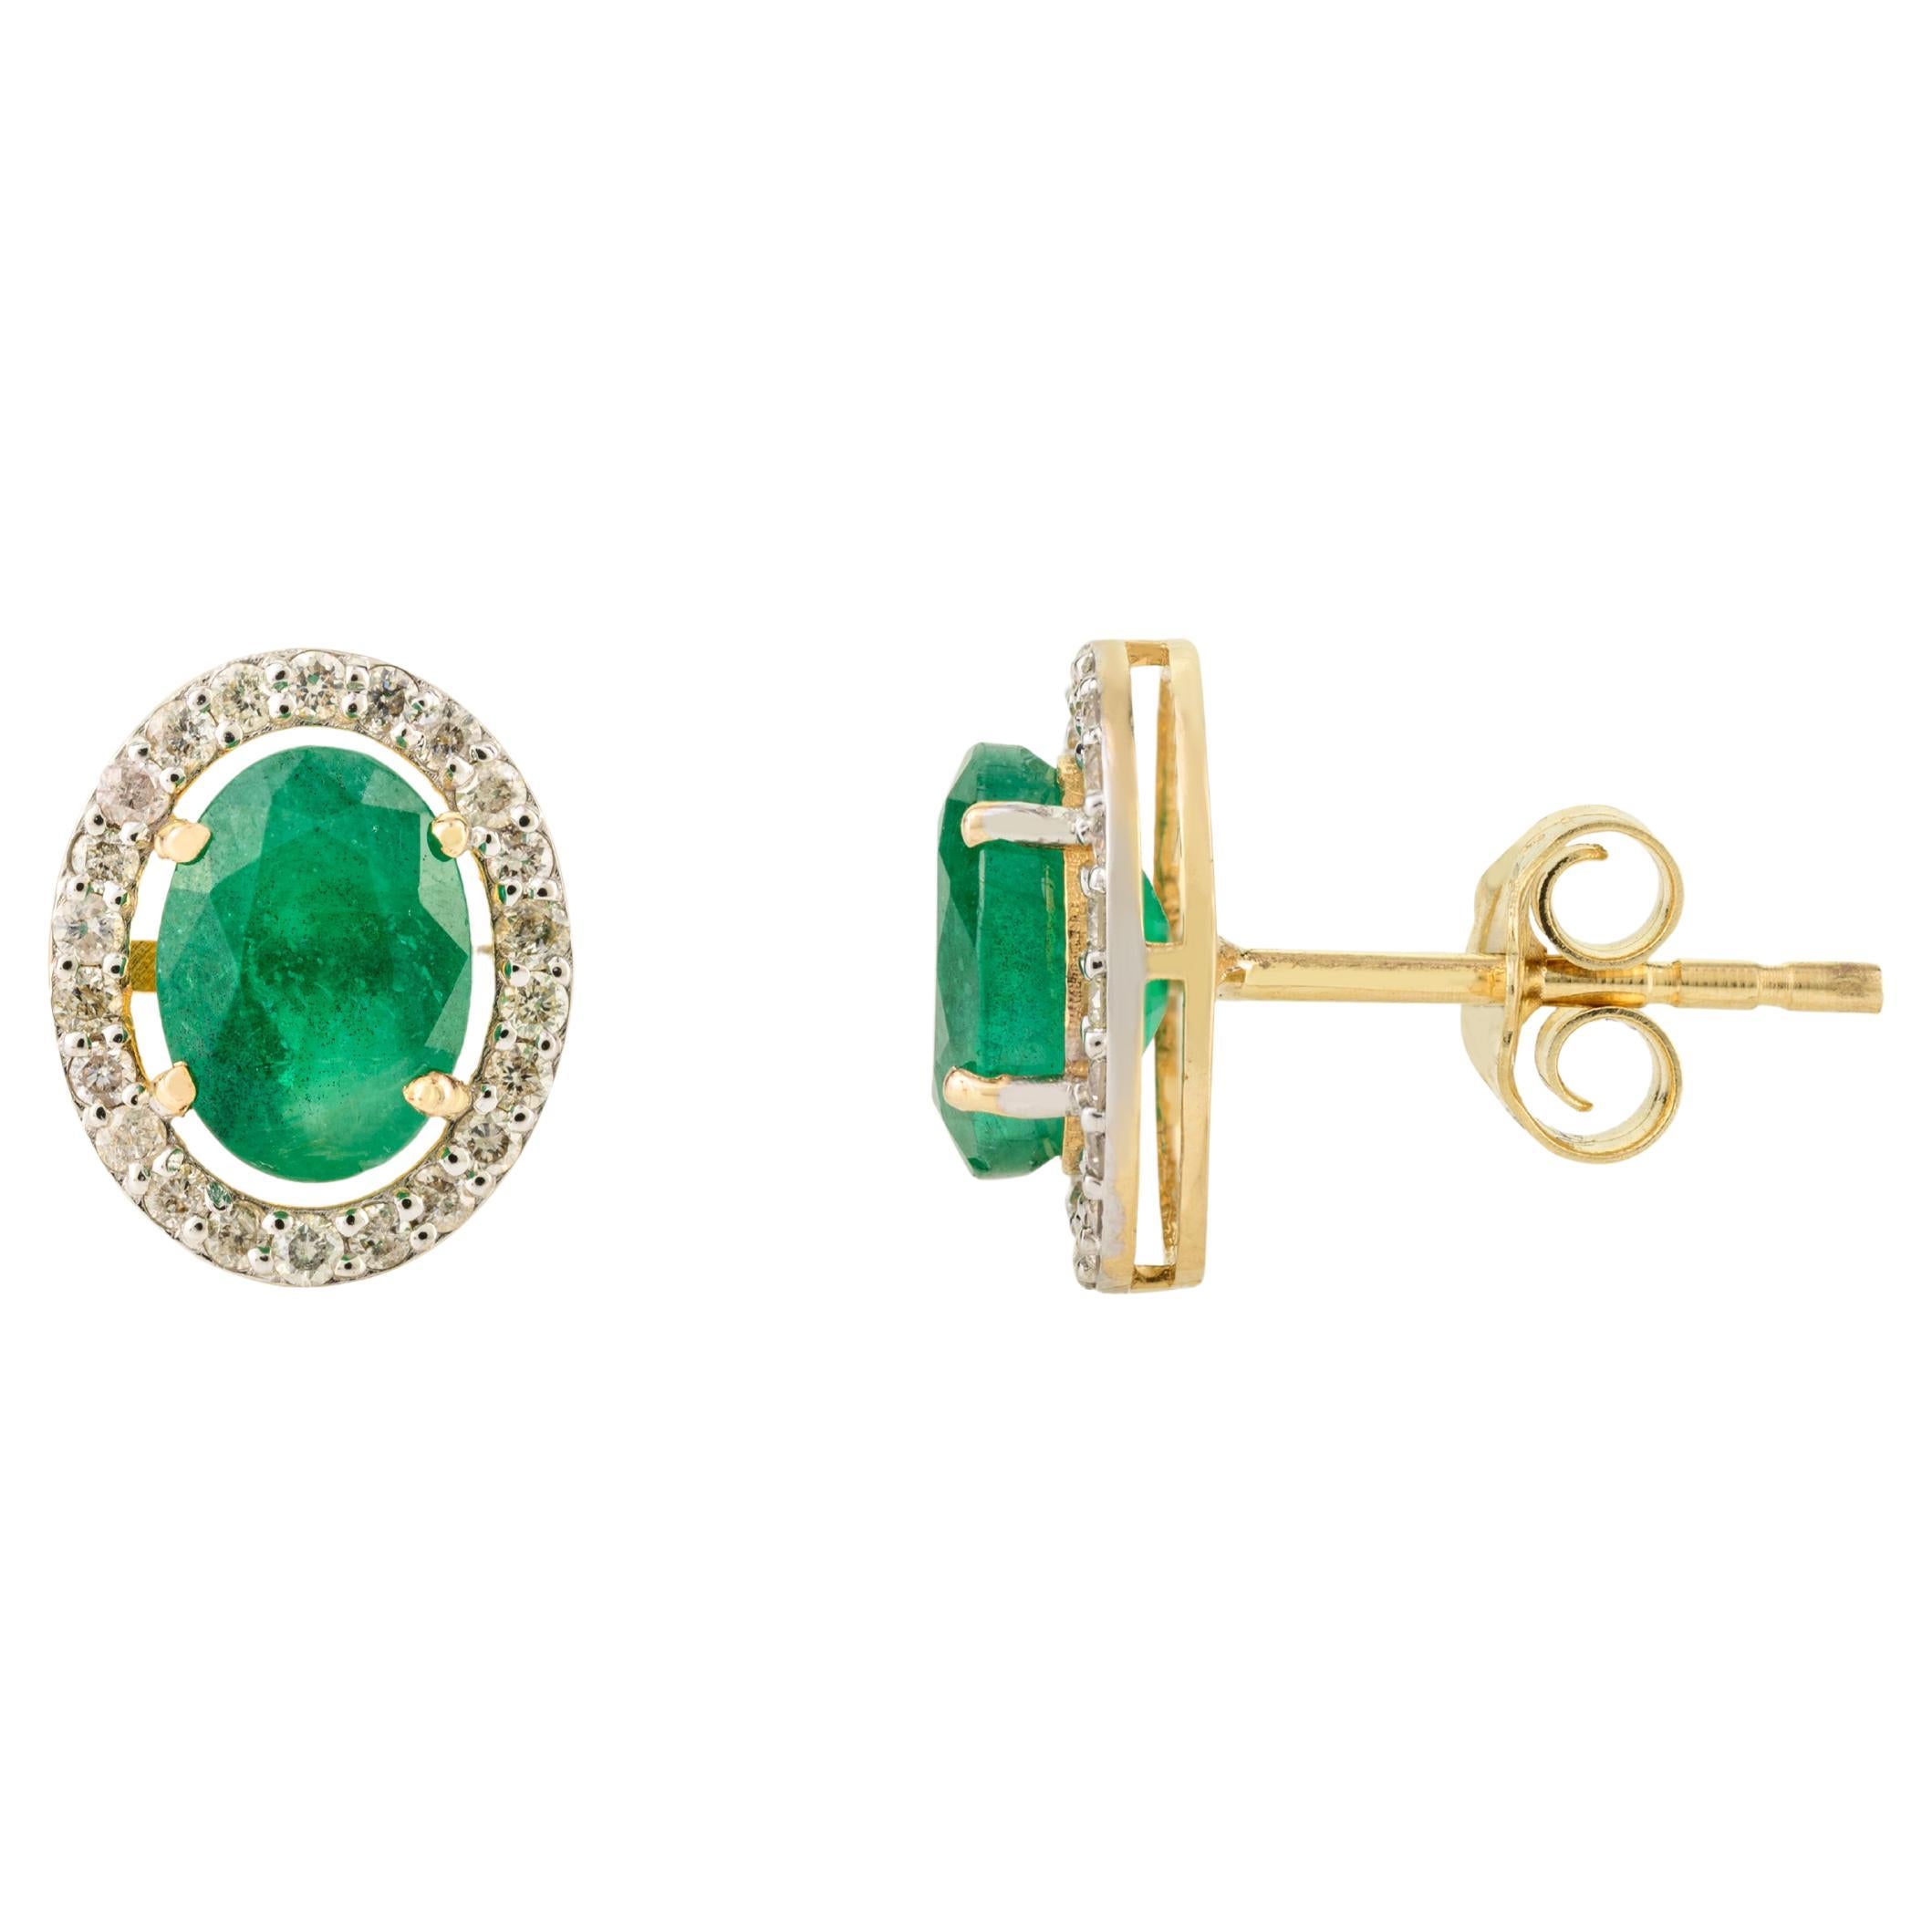 14 Karat Yellow Gold Oval Emerald and Diamond Halo Stud Earrings Gift for Mom